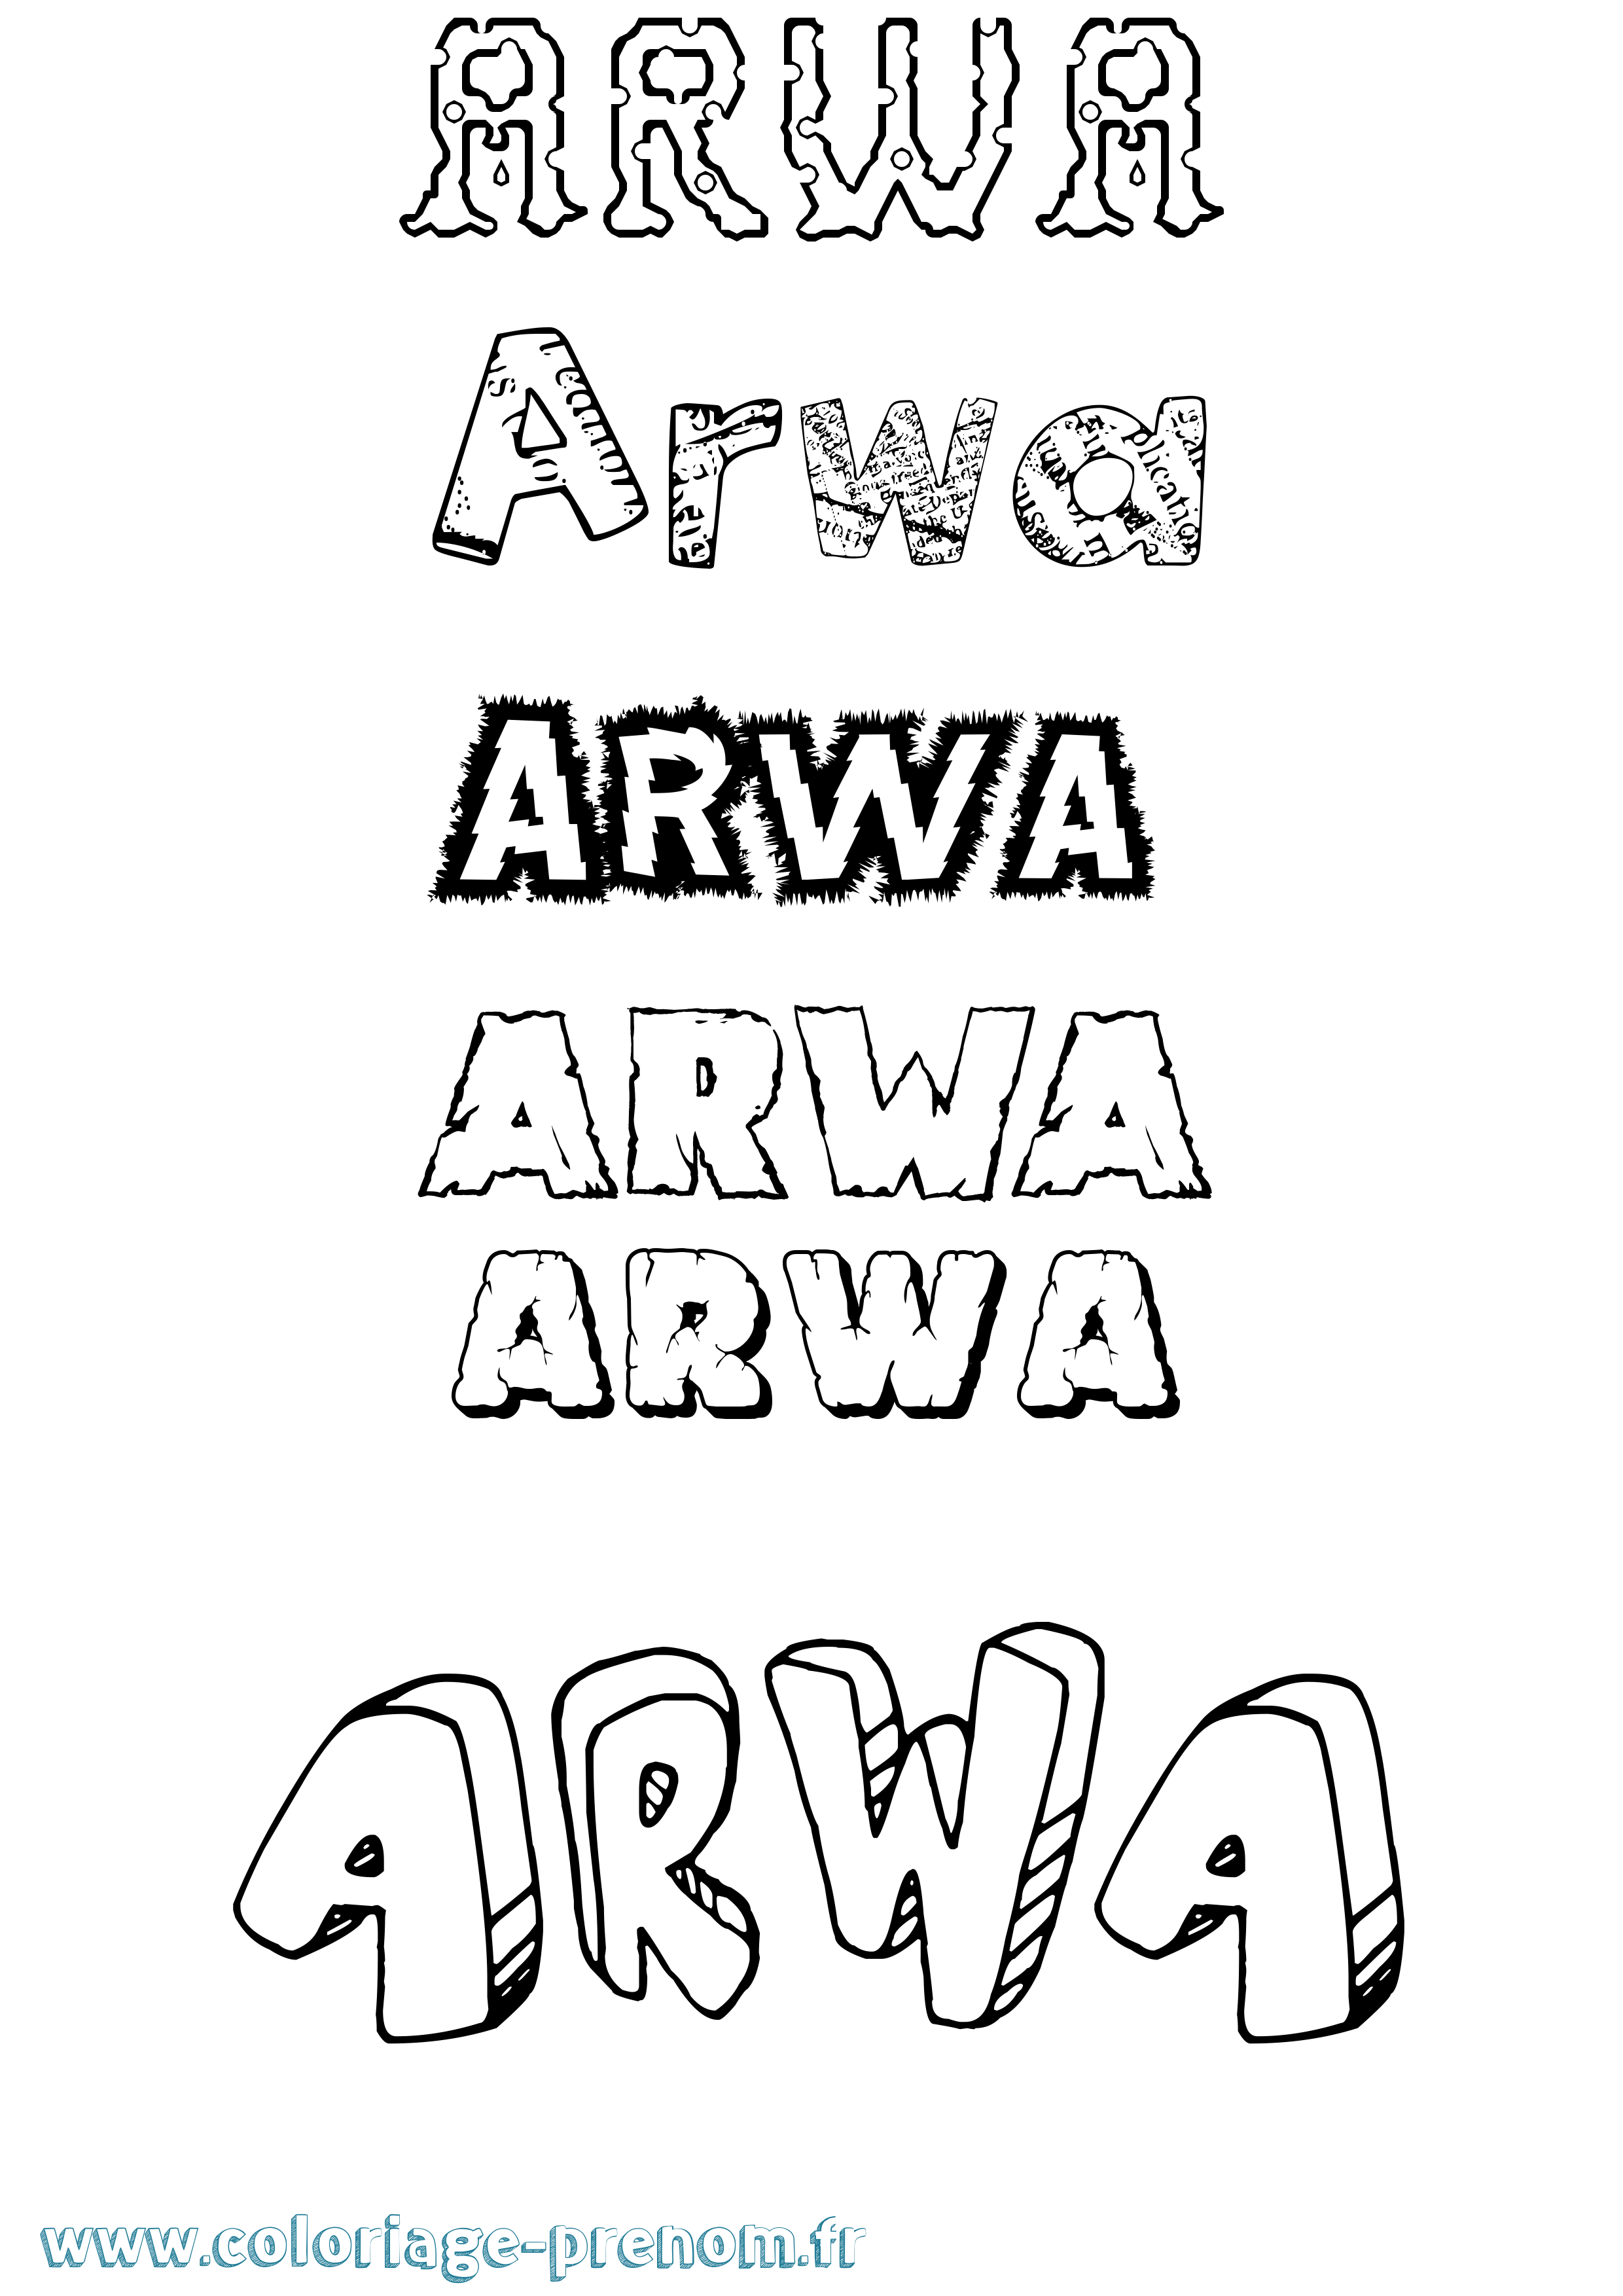 Coloriage prénom Arwa